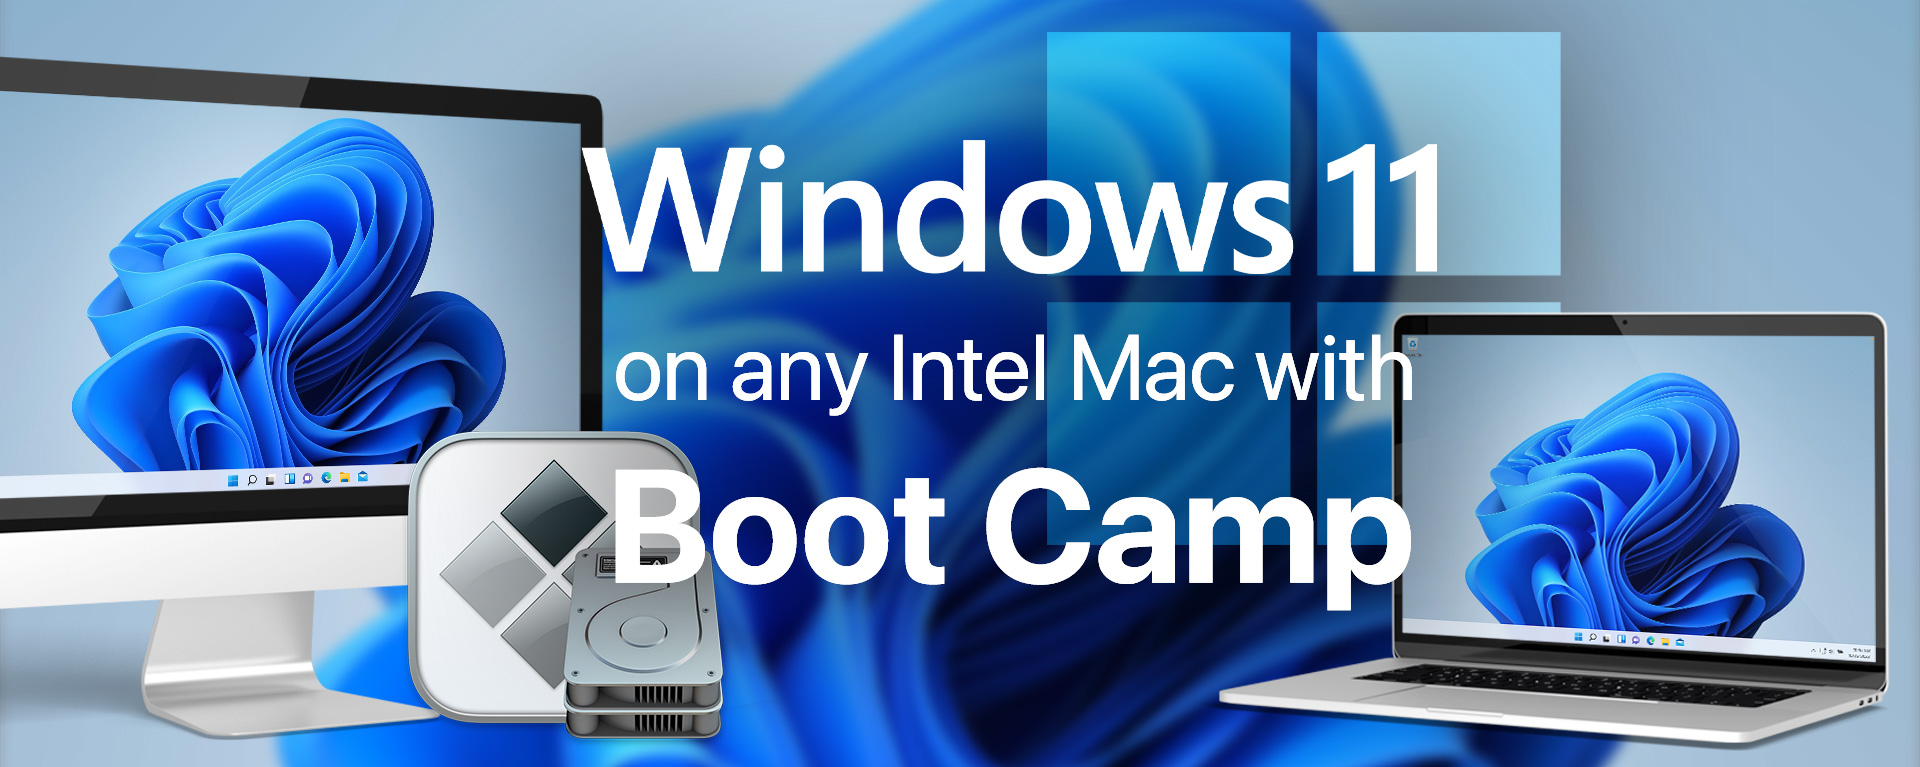 Install Windows 11 on any Intel MacBook Pro, MacBook Air or iMac